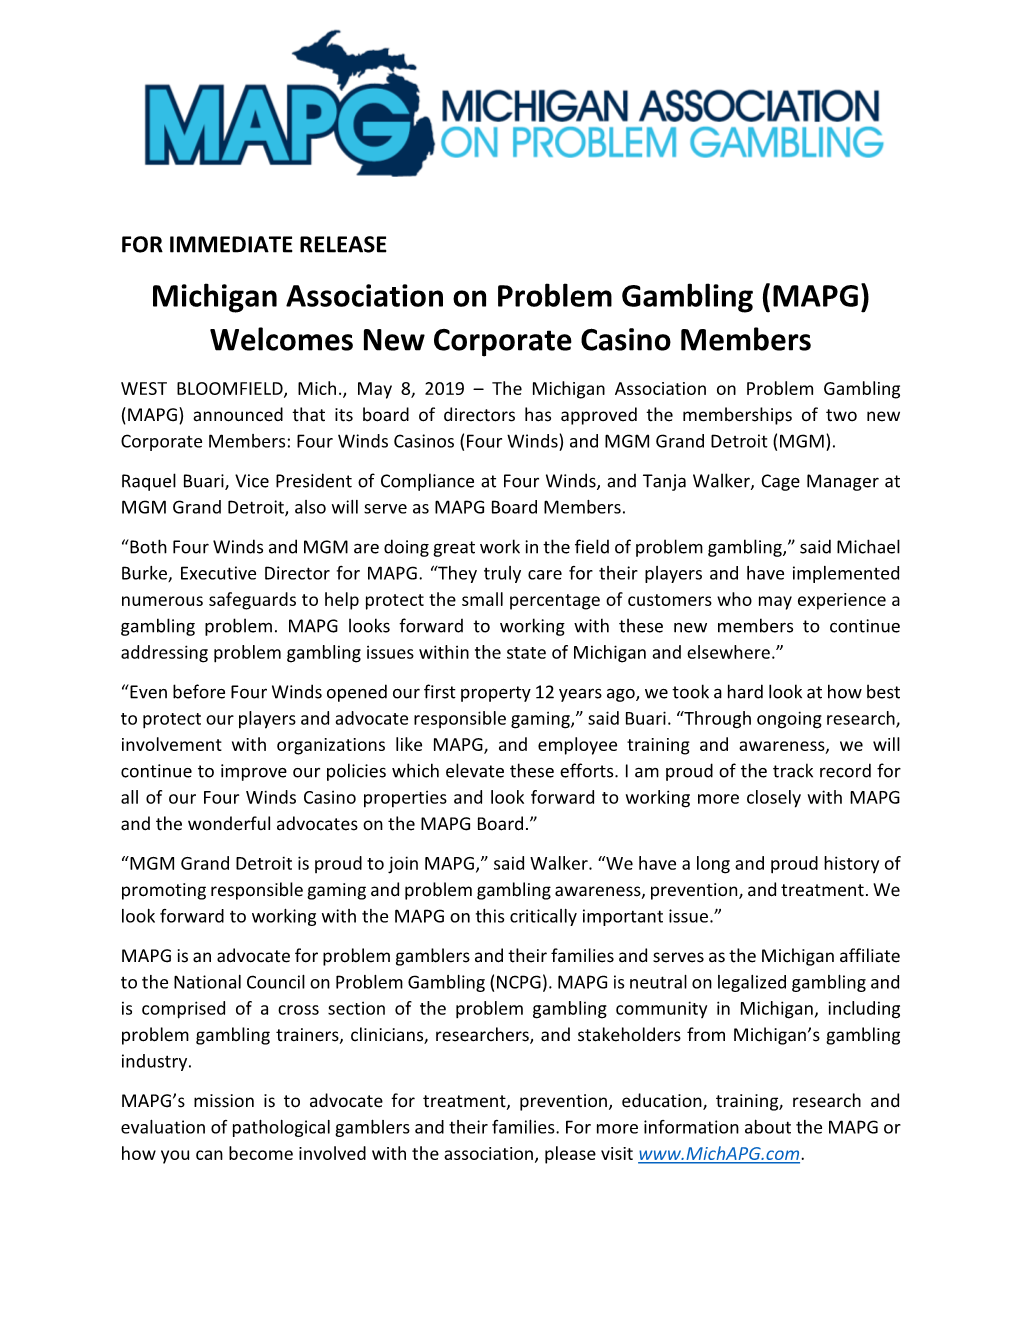 (MAPG) Welcomes New Corporate Casino Members